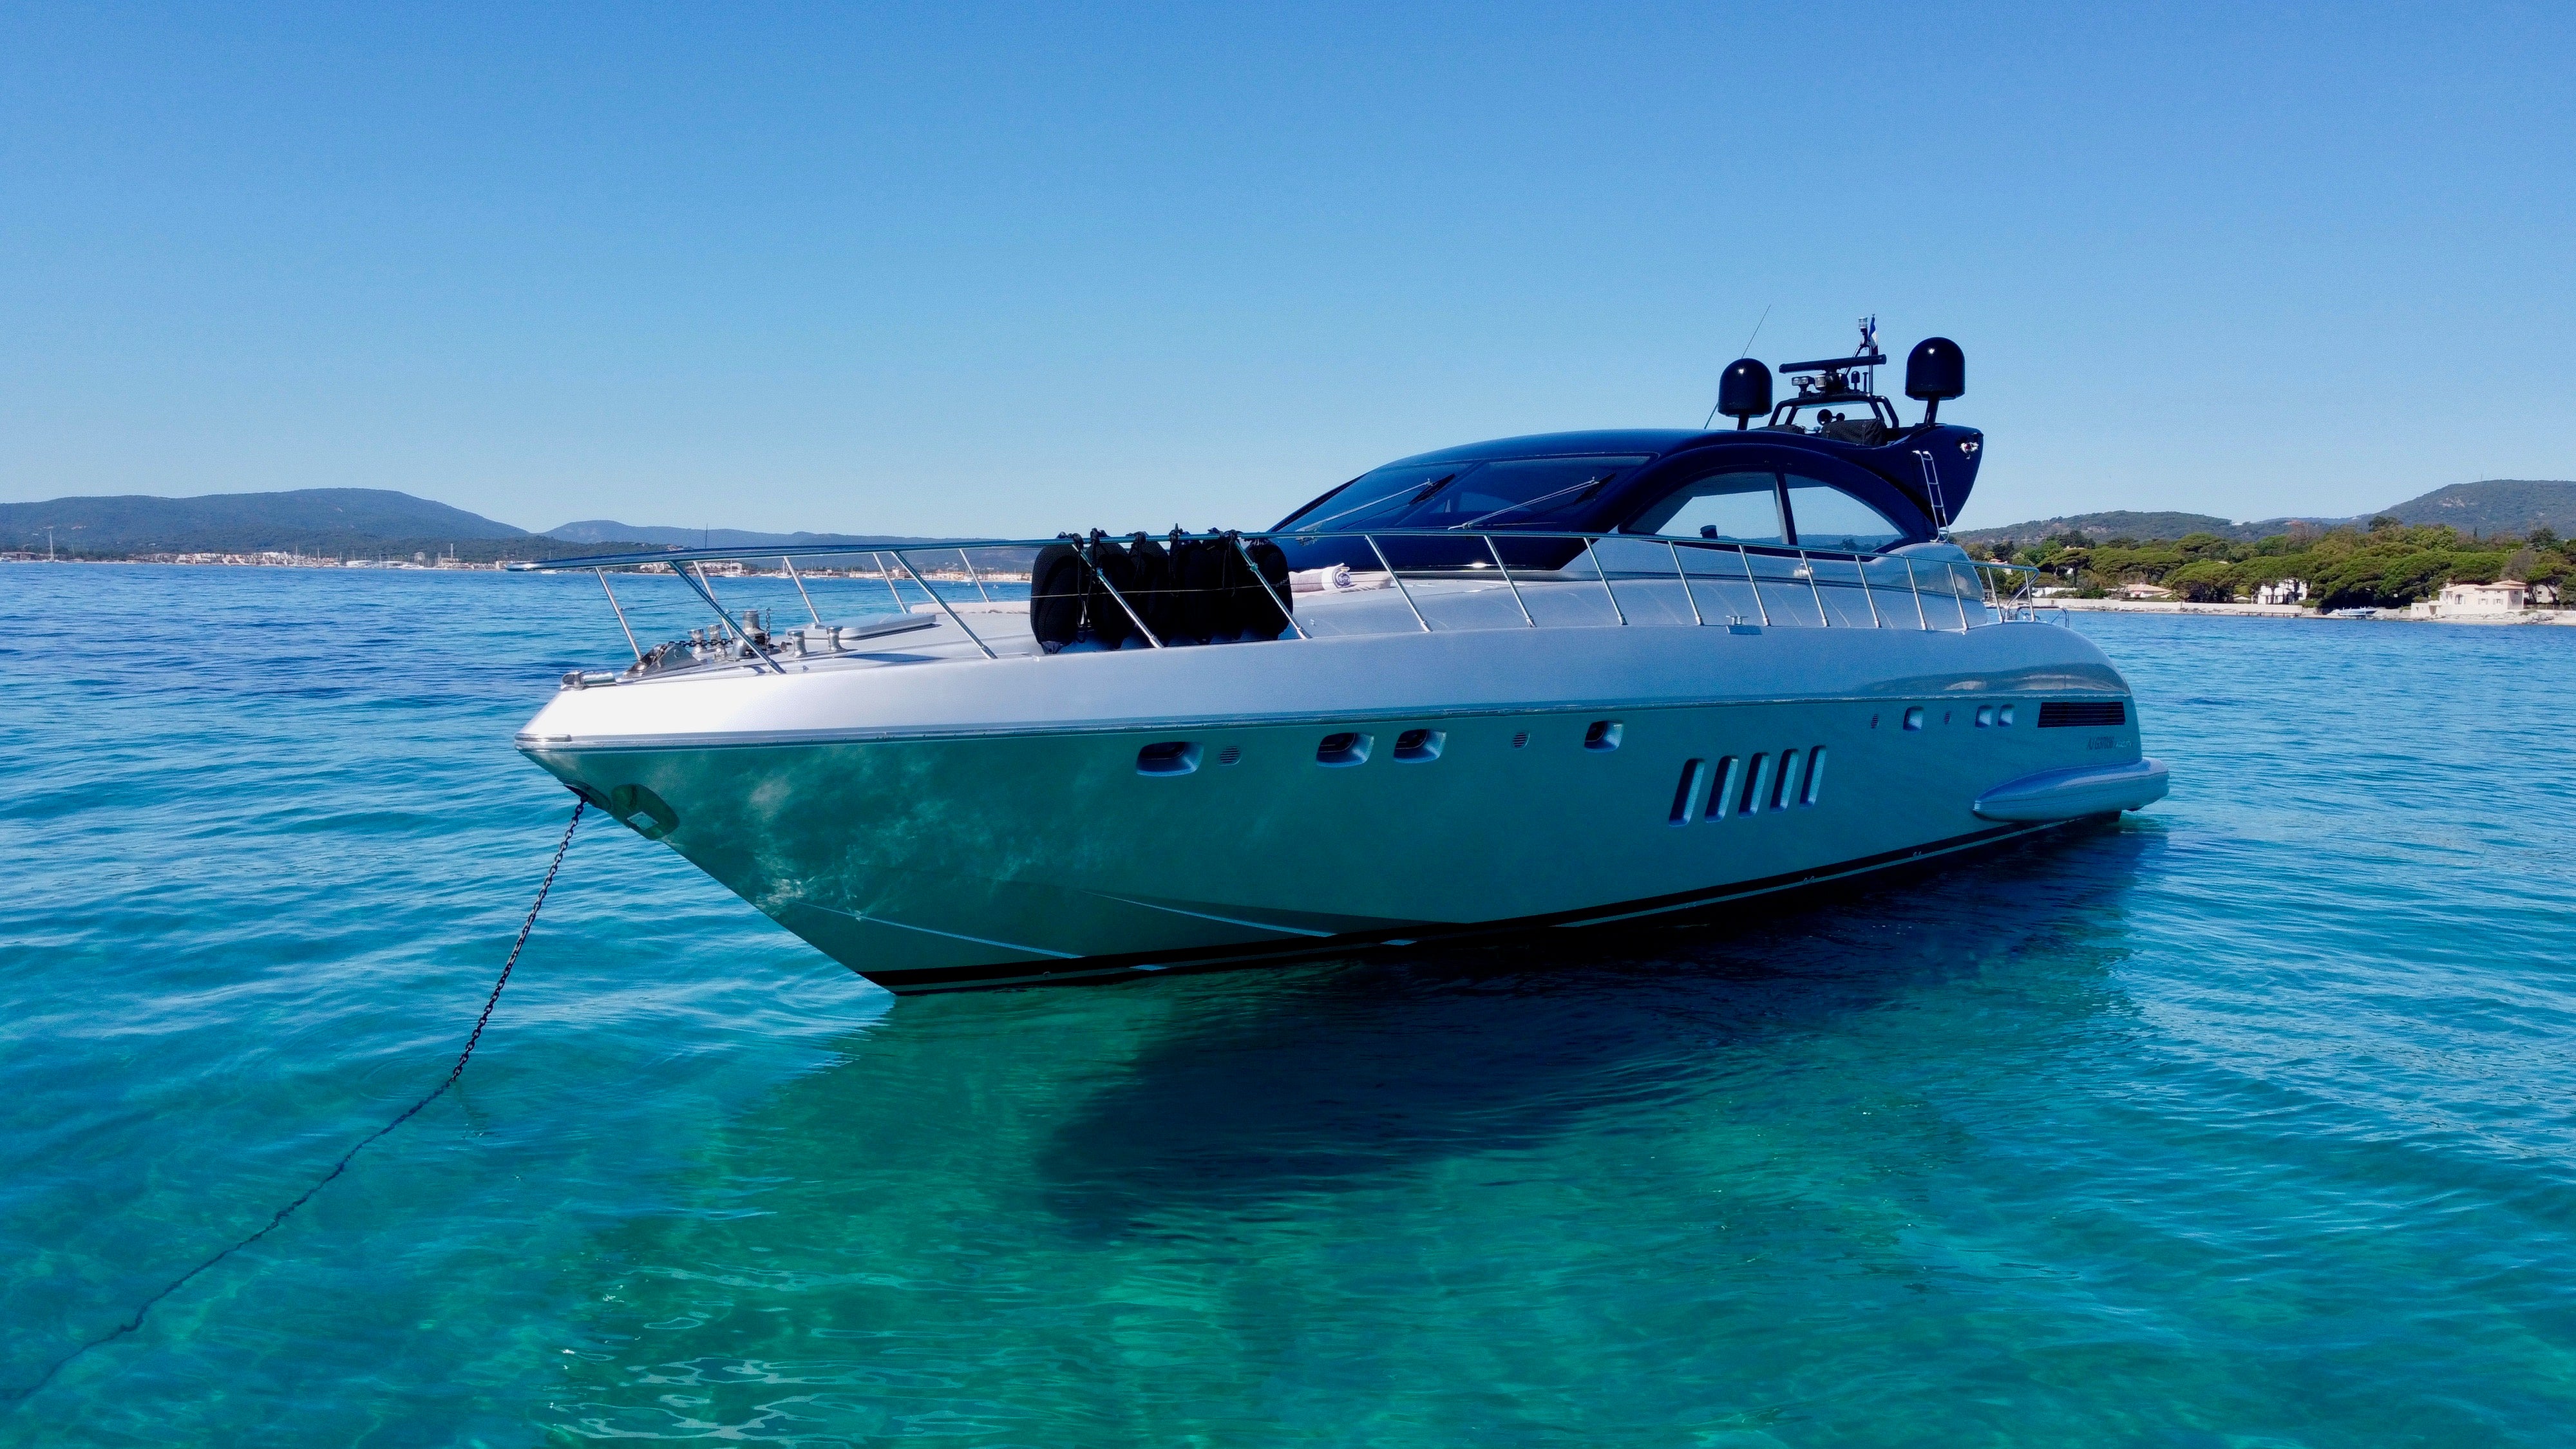 Mega yacht Charter St Tropez France